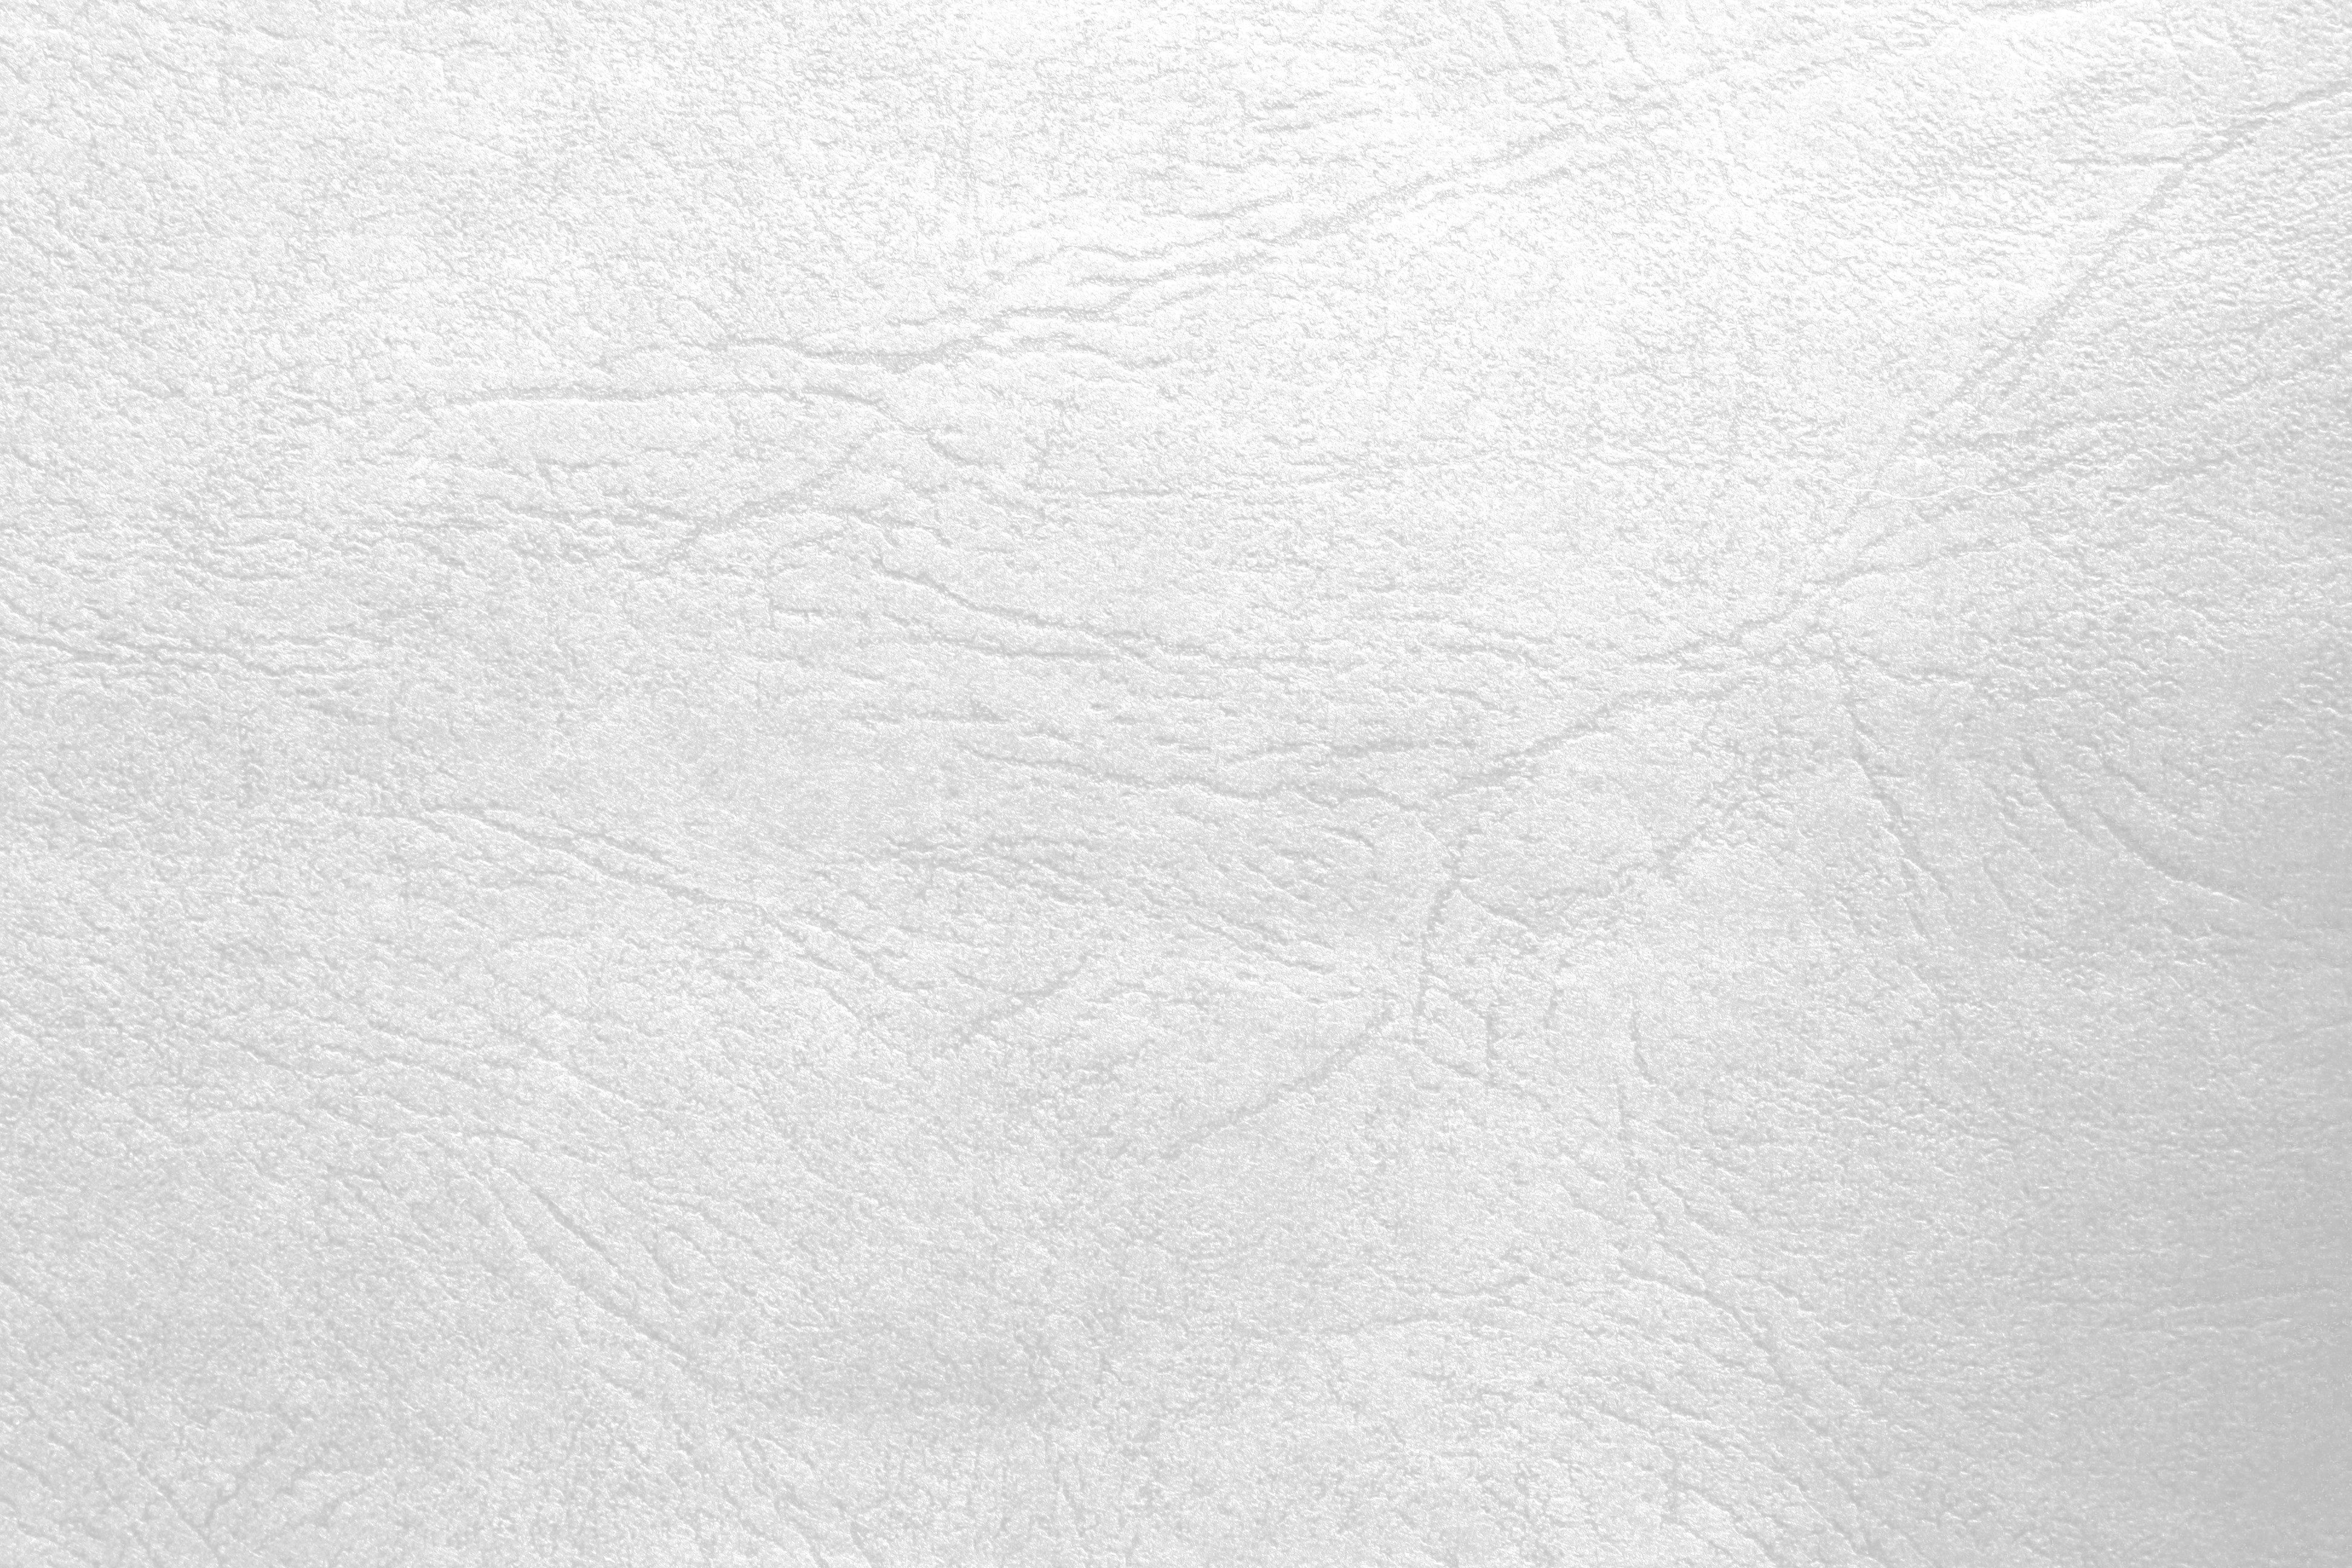 White Leather Texture- new desktop background :). texture